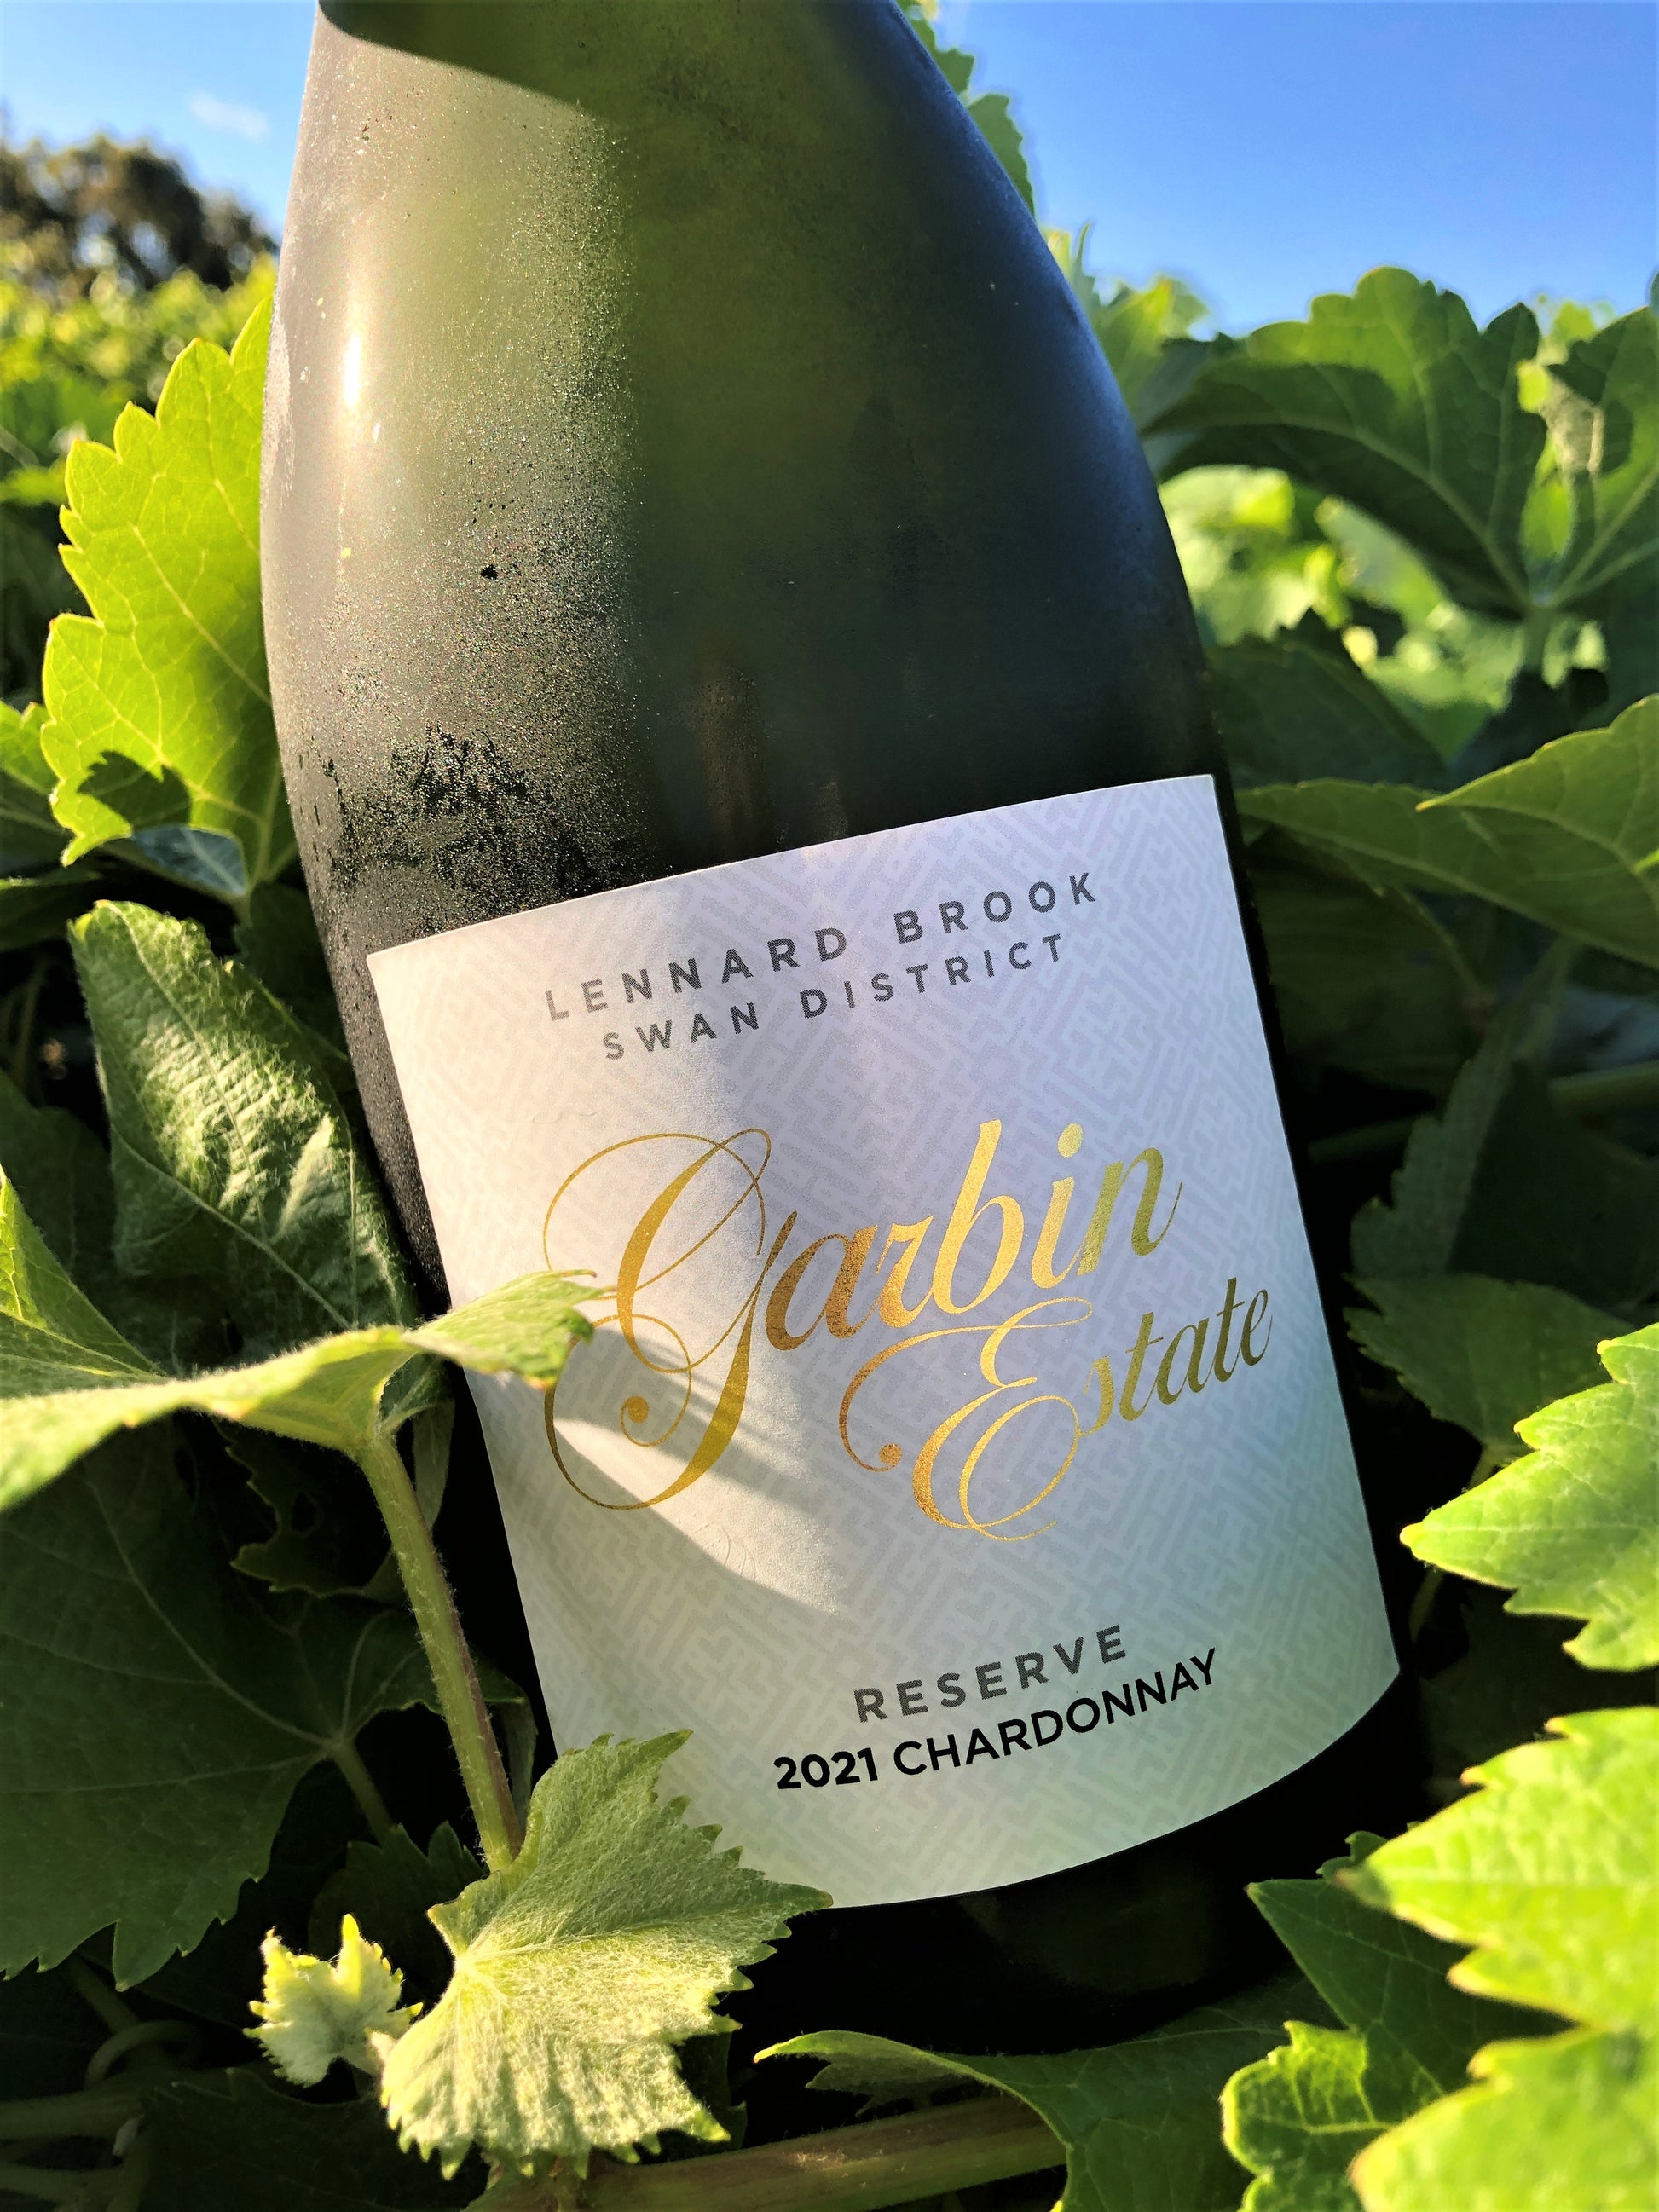 A bottle of Garbin Estate Wines Reserve Chardonnay 2021 sitting in vine leaves.